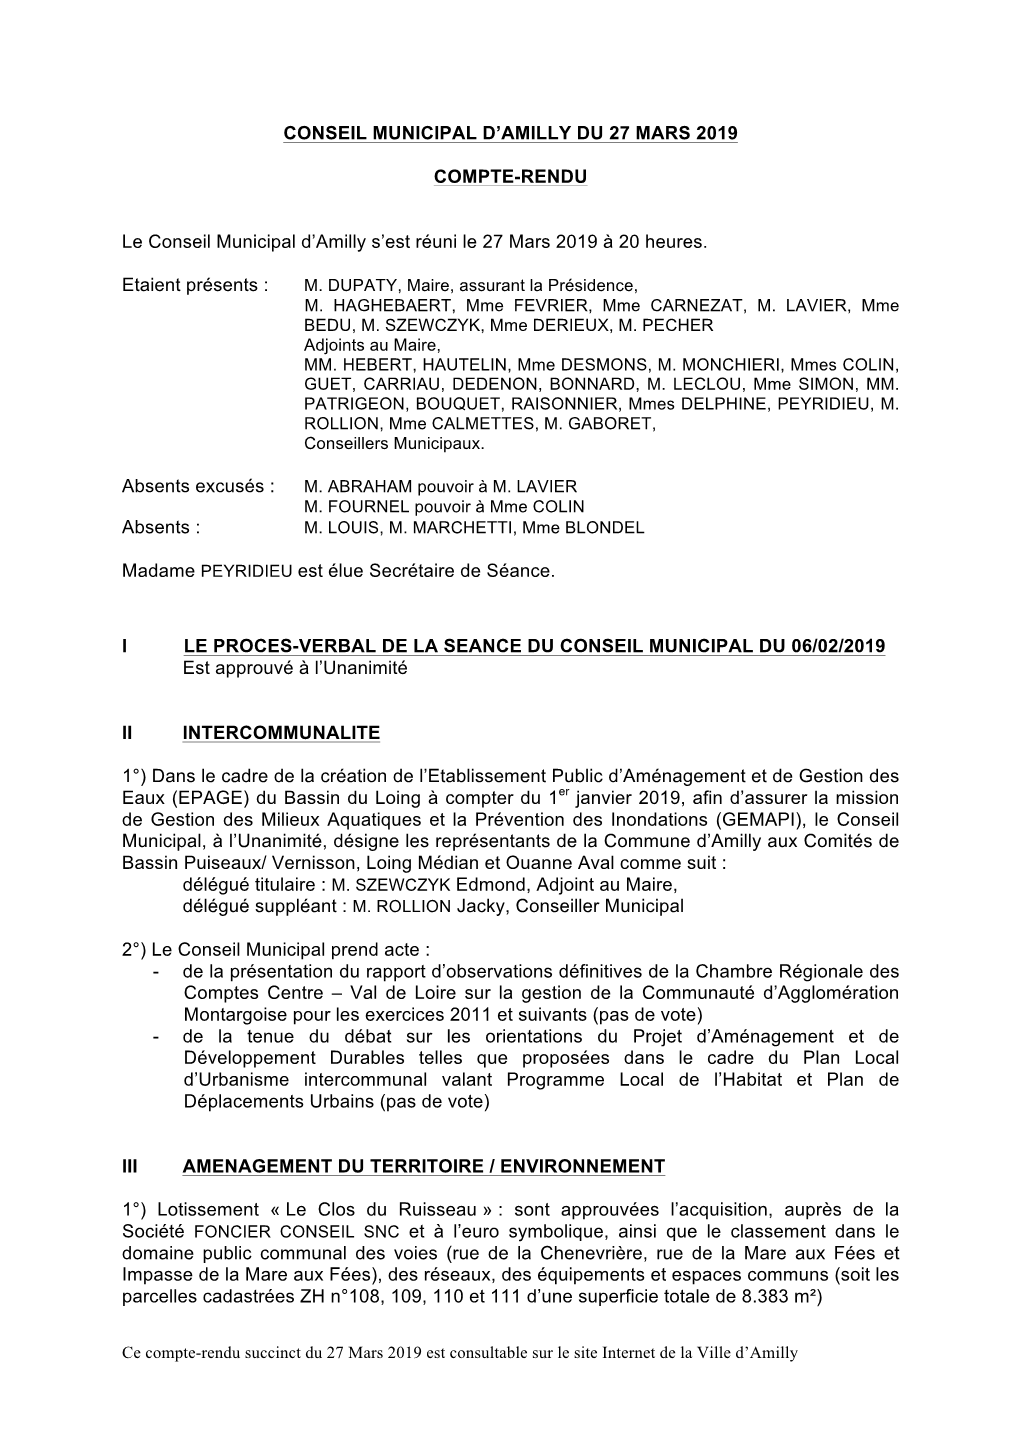 Conseil Municipal D'amilly Du 27 Mars 2019 Compte-Rendu